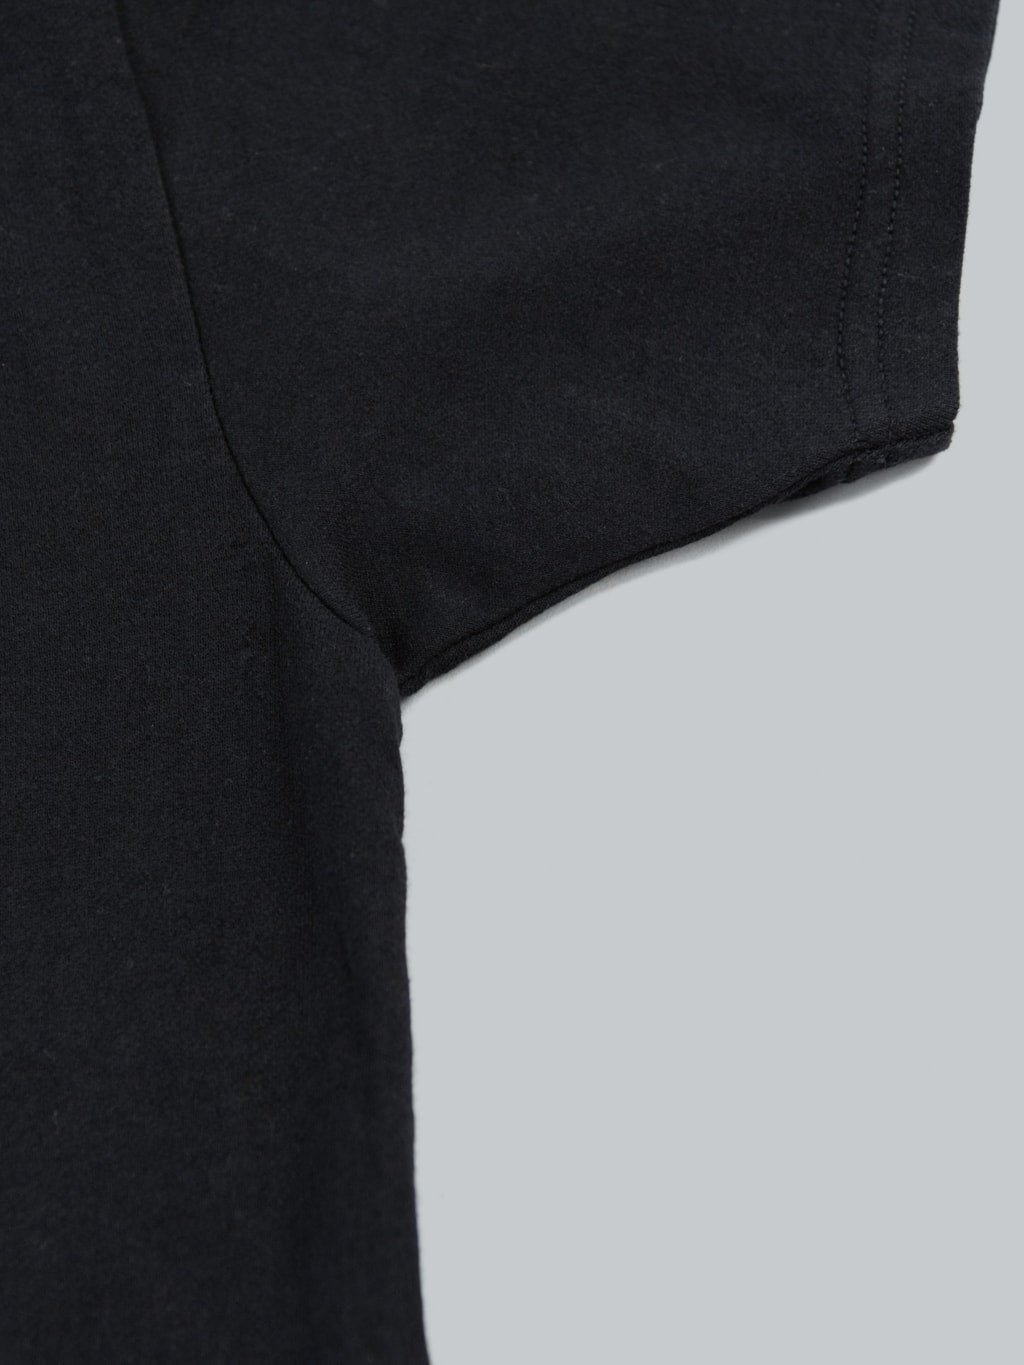 Samurai Jeans Loopwheel Ripened Cotton Tshirt Black sleeve